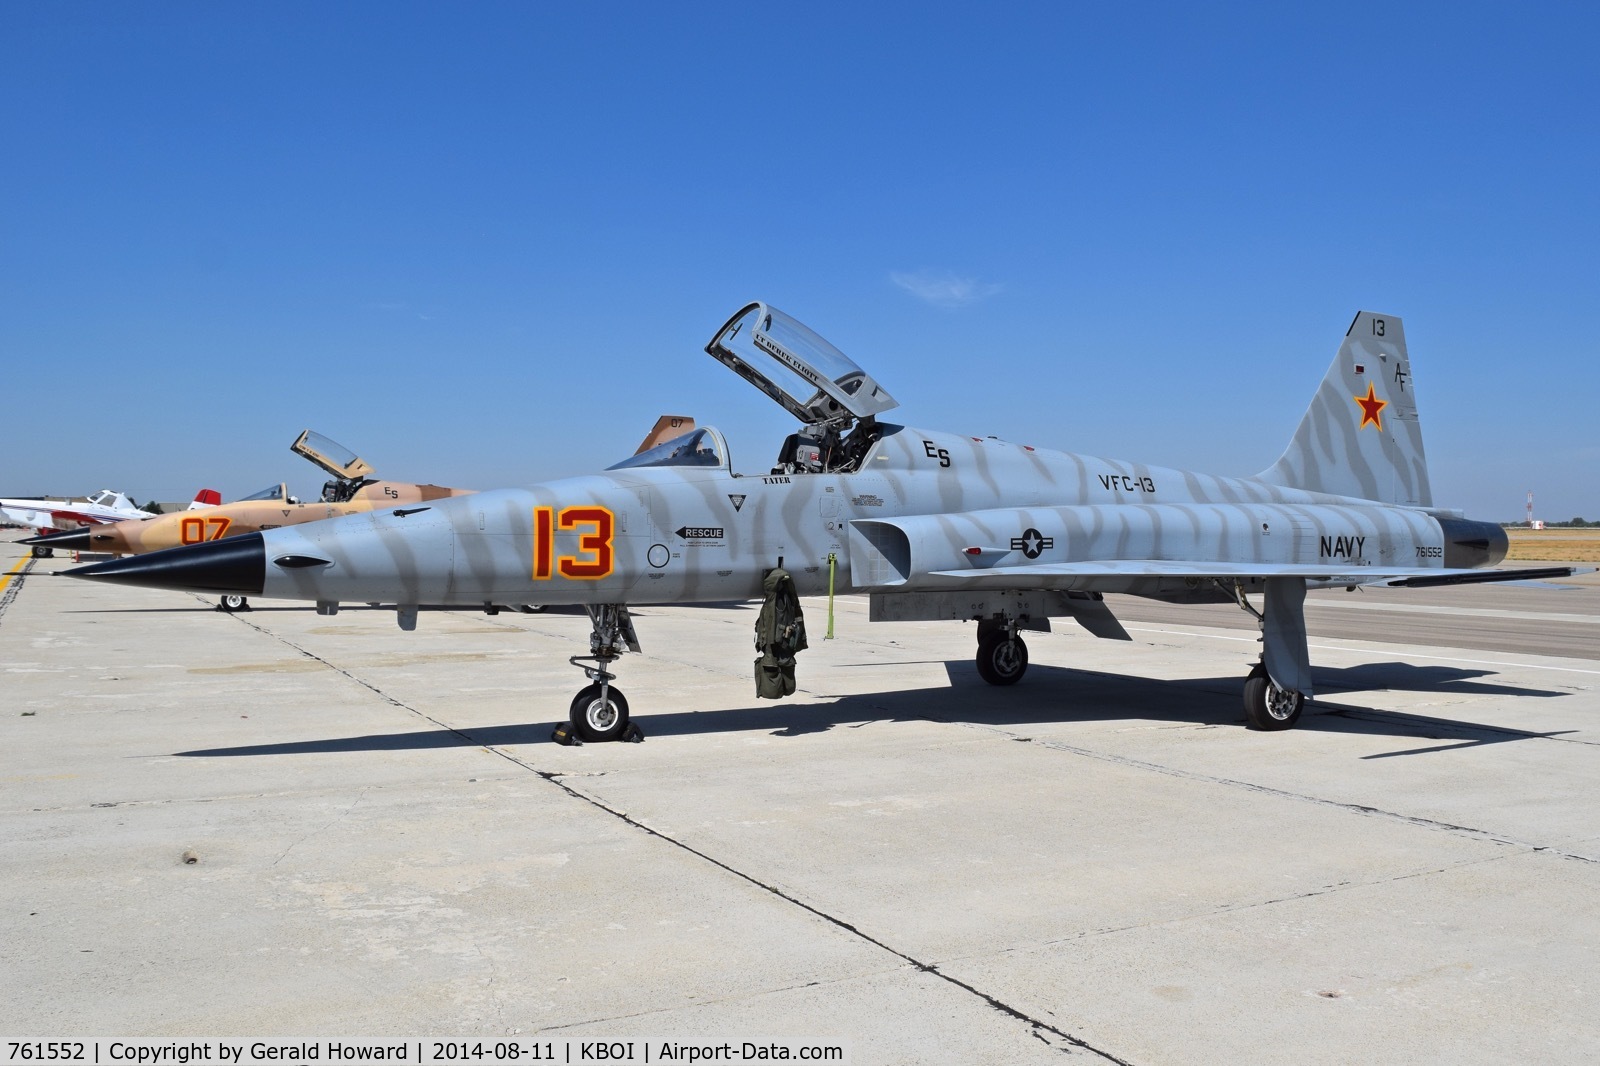 761552, Northrop F-5N Tiger II C/N L.1027, Parked on the south GA ramp.  VFC-13  “Saints”  NAS Fallon, NV.